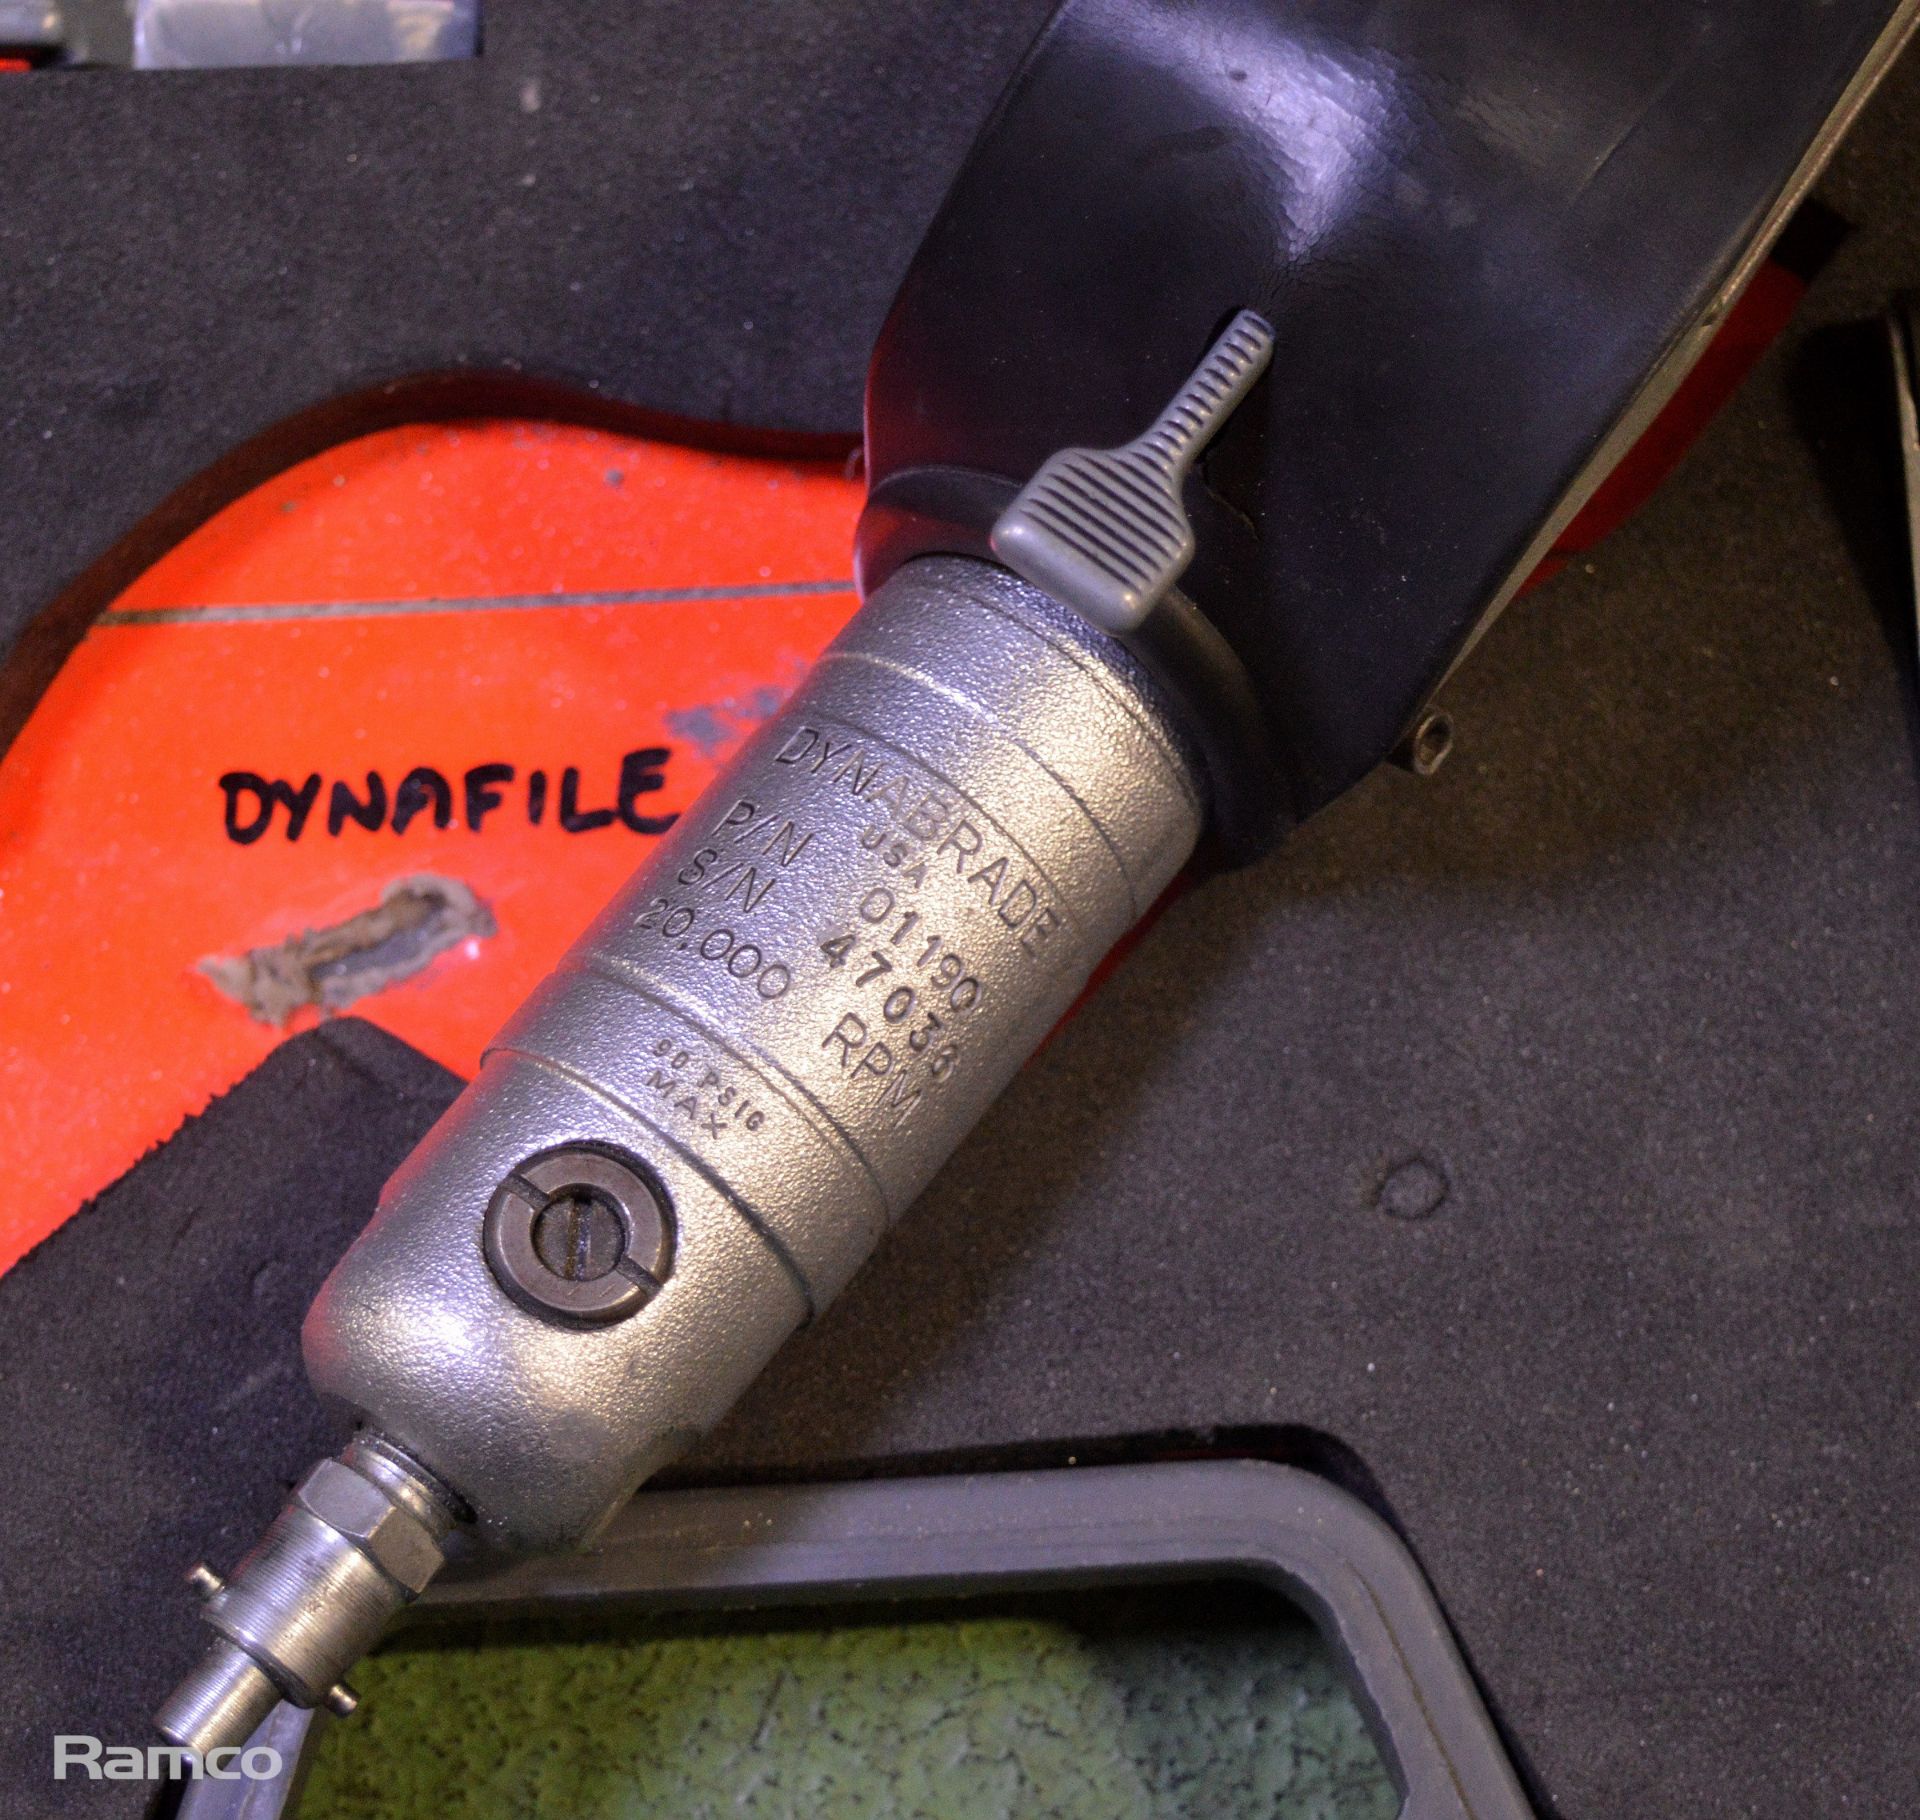 Dynafile 14000 Pneumatic Dynafile Abrasive Belt Tool In Case - Image 3 of 4